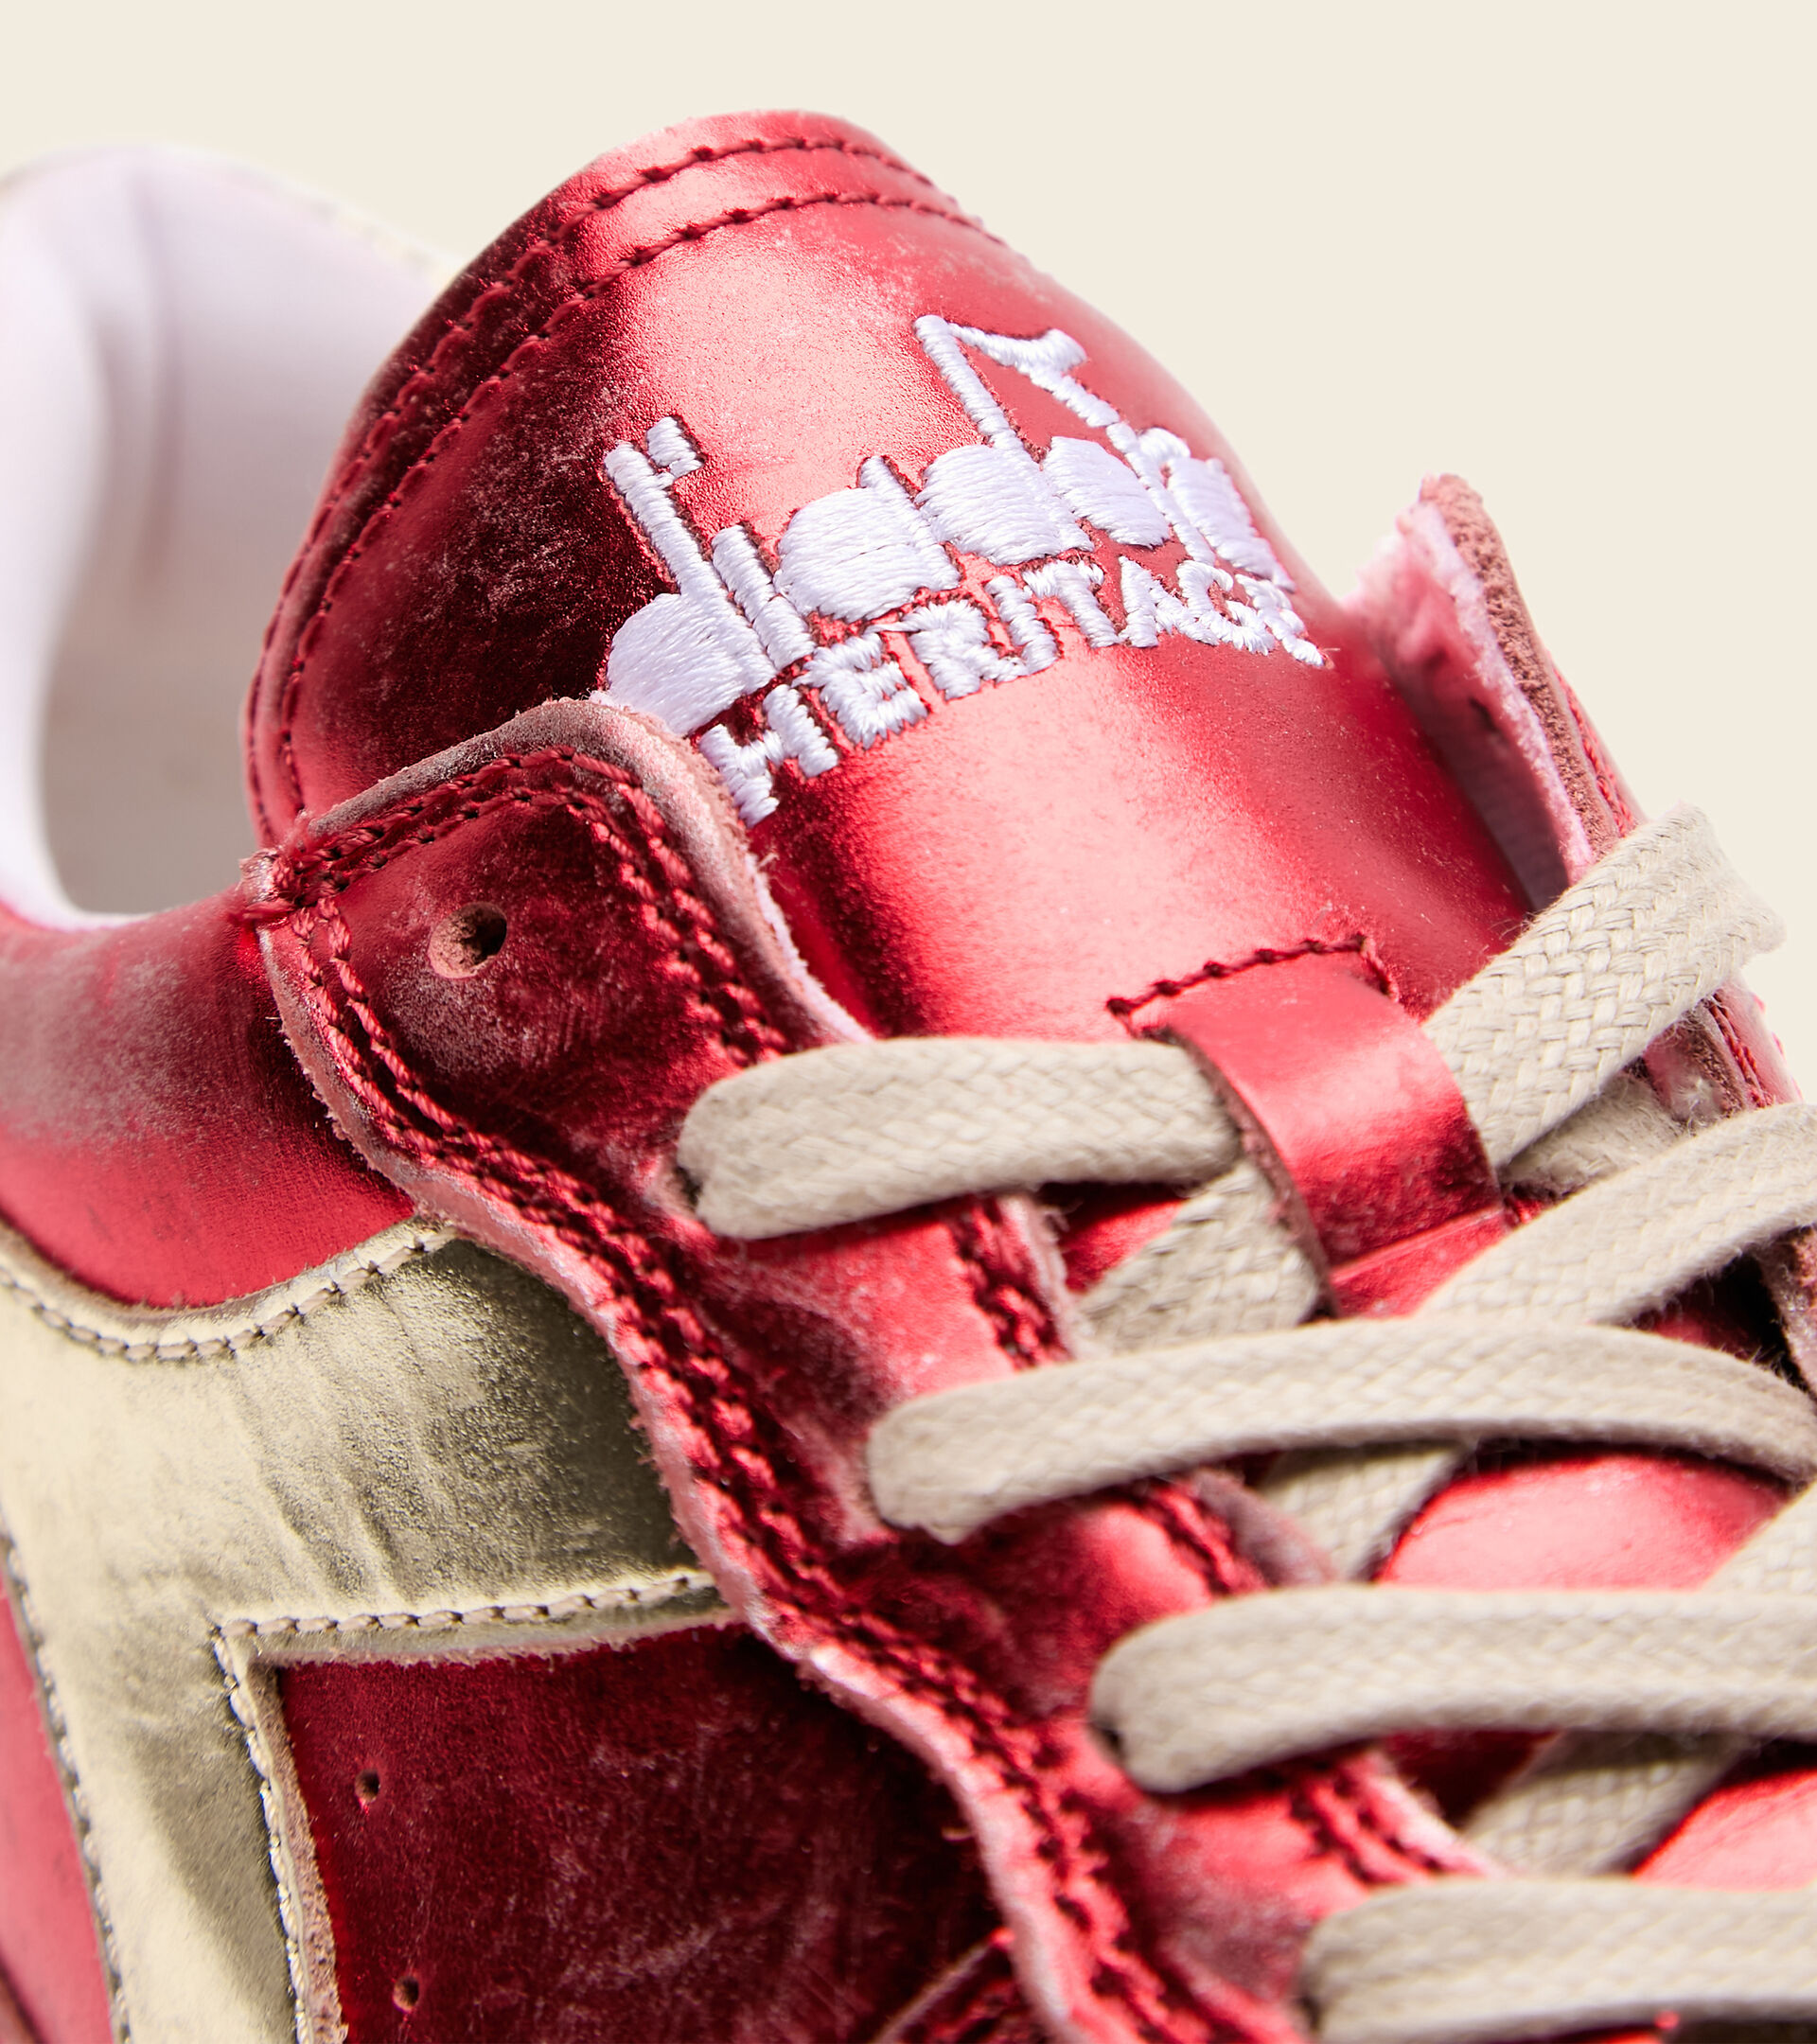 Heritage shoe - Unisex MI BASKET LOW METALLIC USED WN CARMINE RED - Diadora